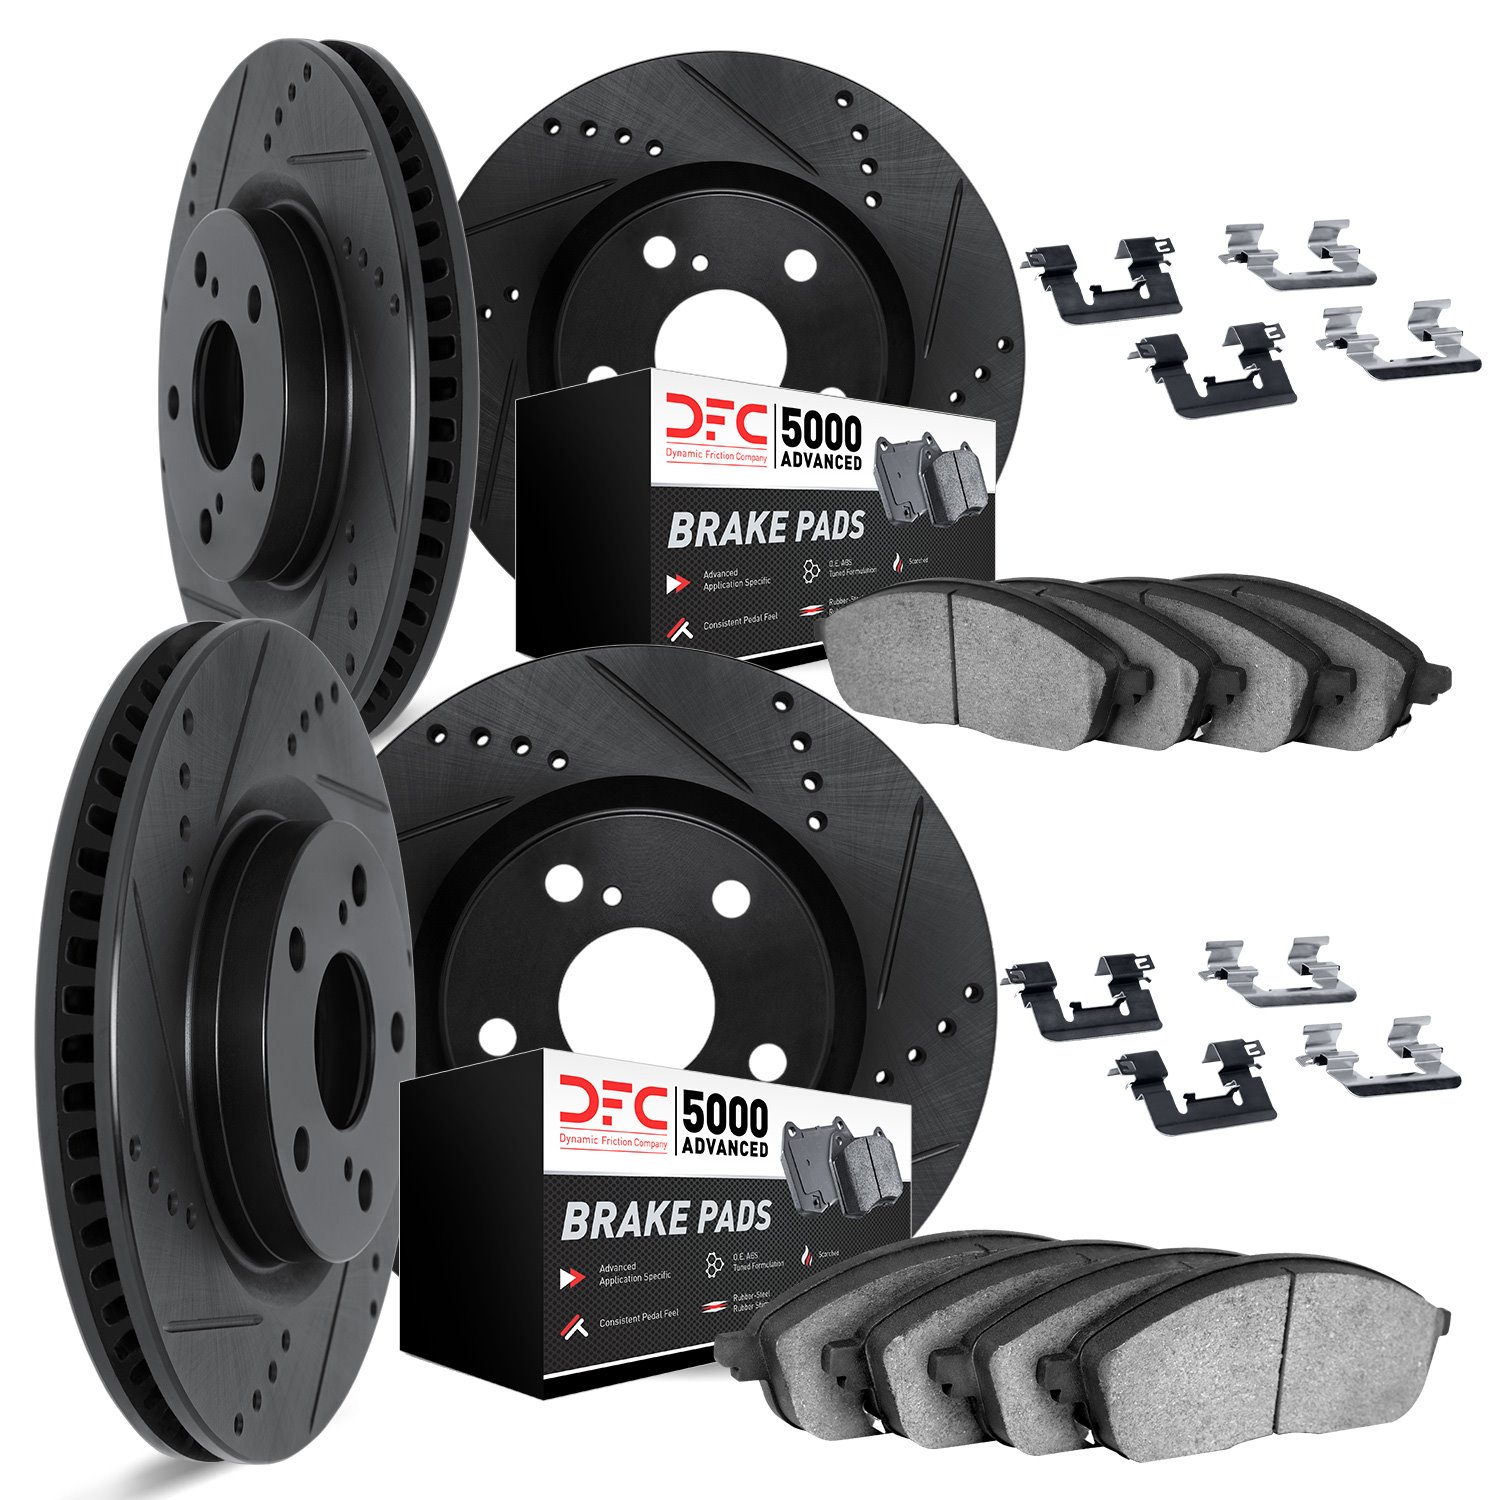 8514-67122 Drilled/Slotted Brake Rotors w/5000 Advanced Brake Pads Kit & Hardware [Black], Fits Select Infiniti/Nissan, Position